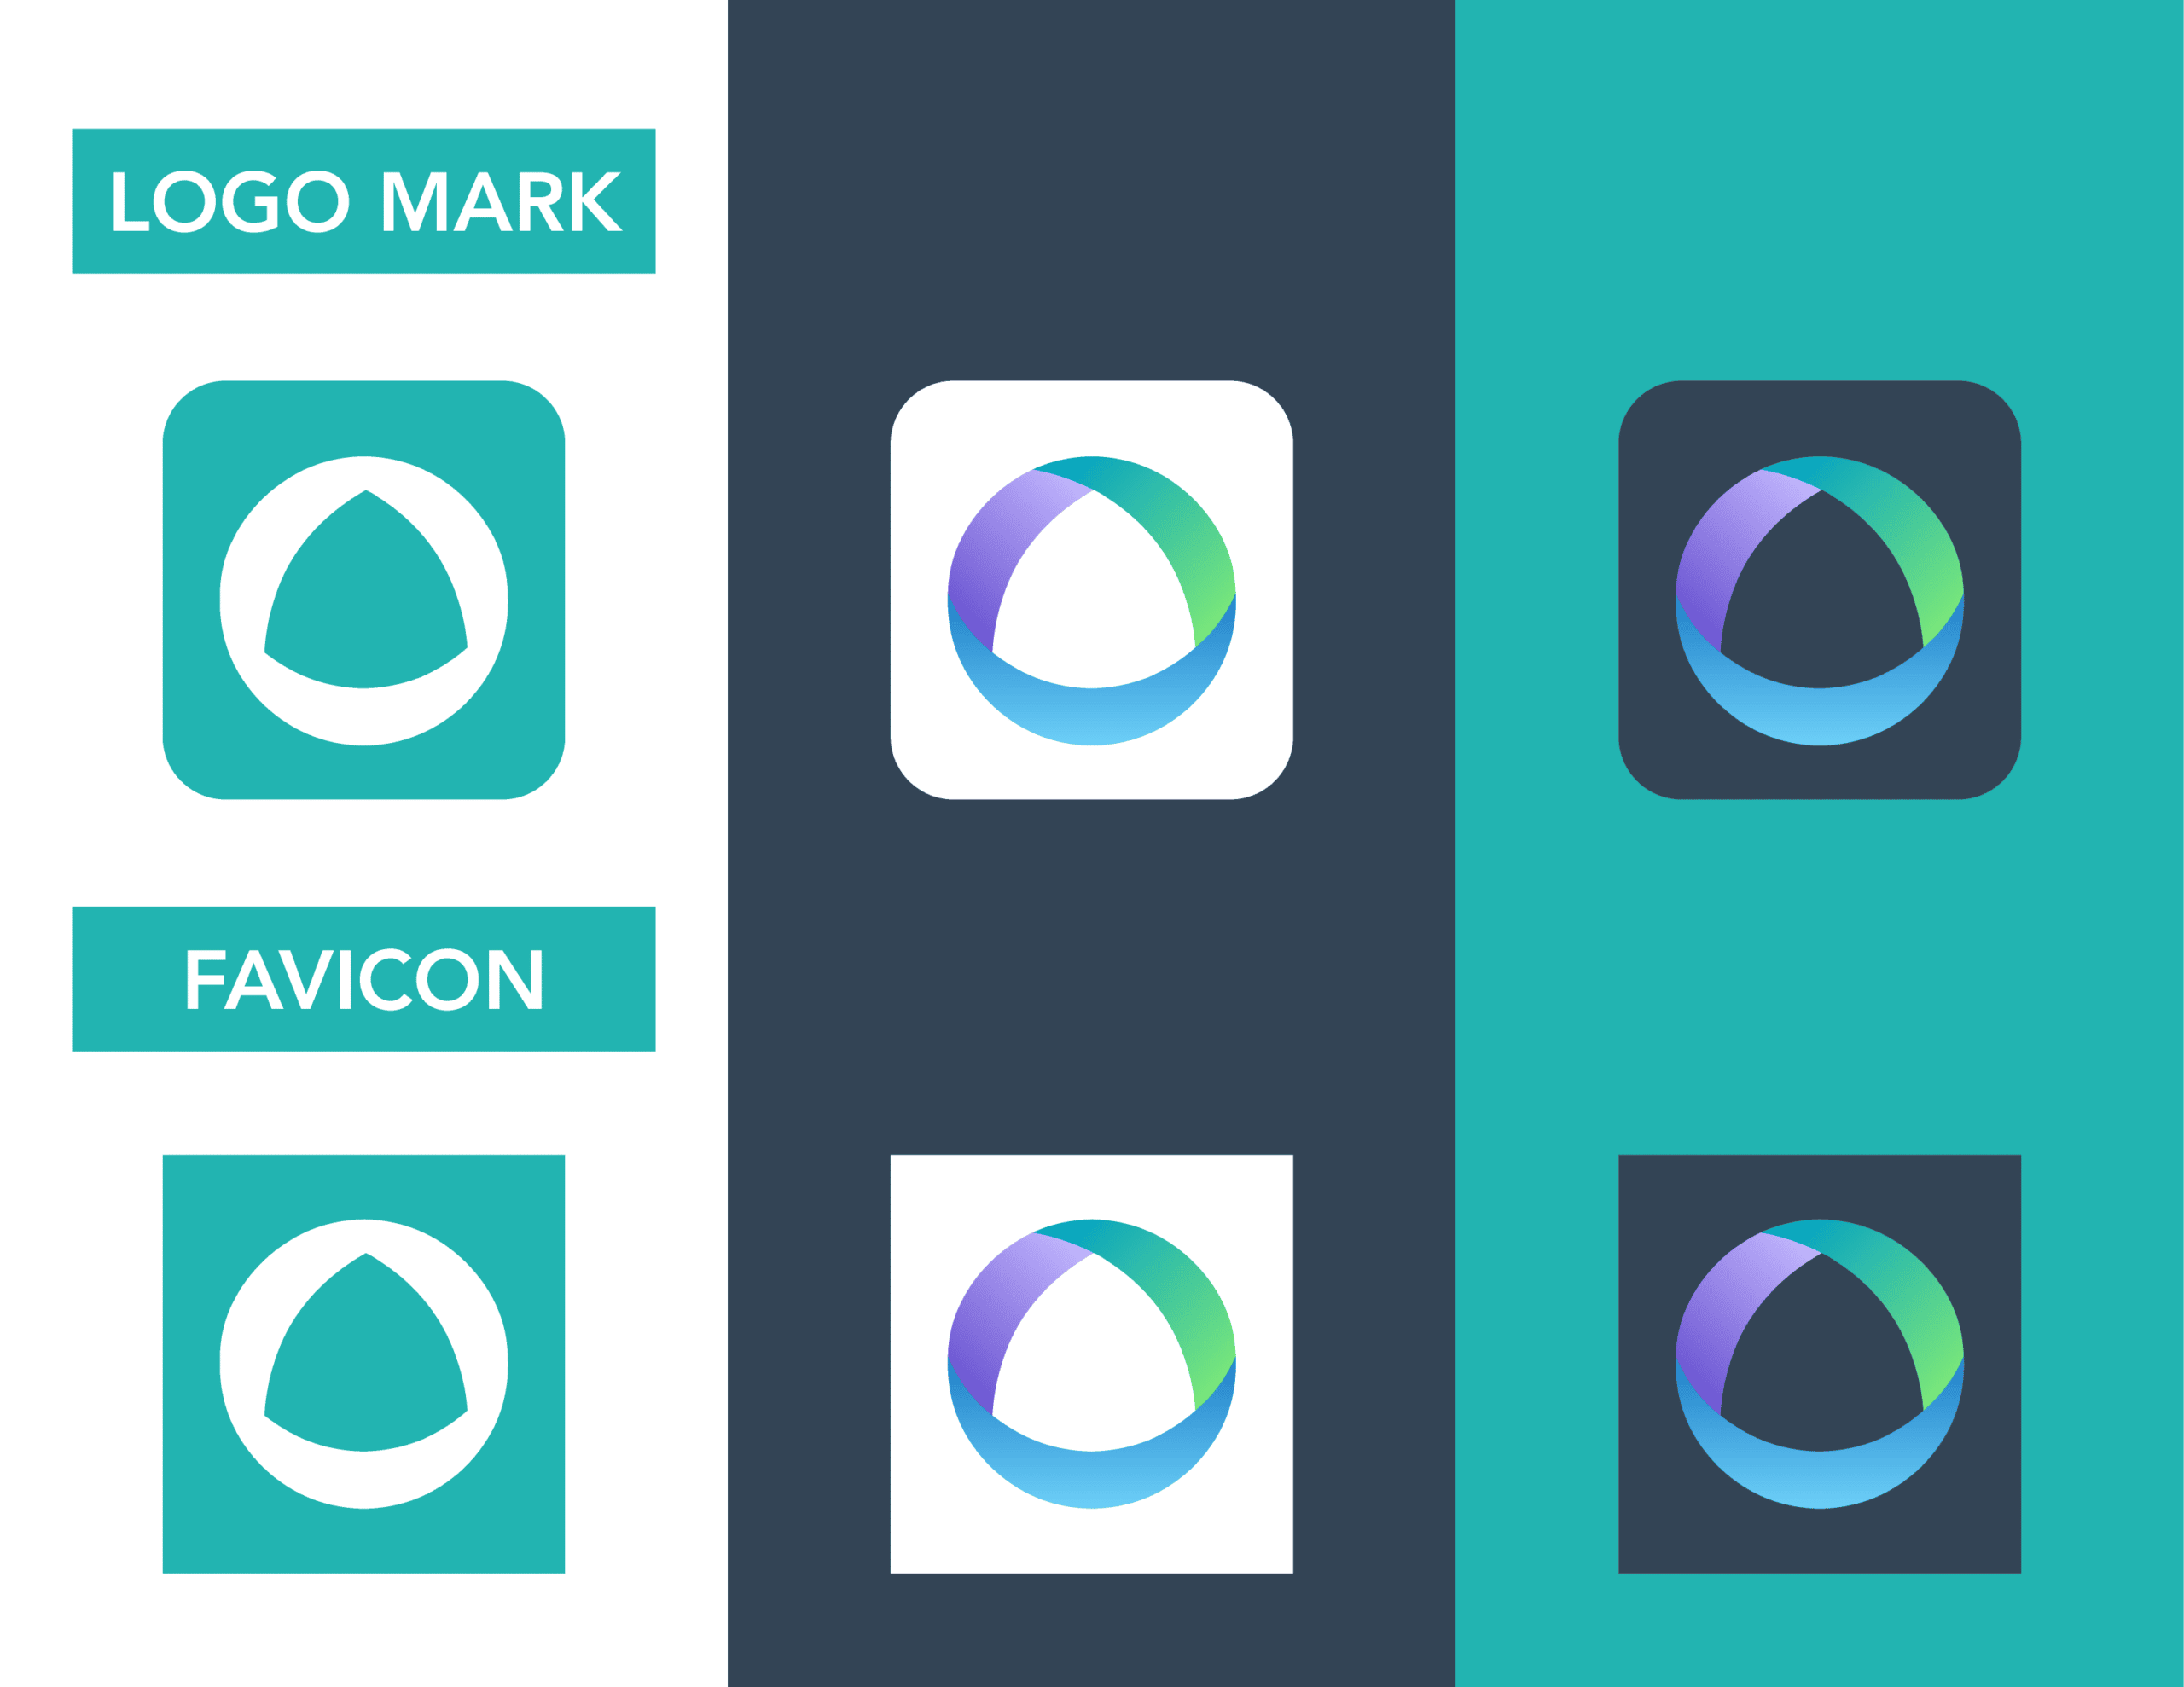 02LifetimeBK__Logo Mark and Favicon